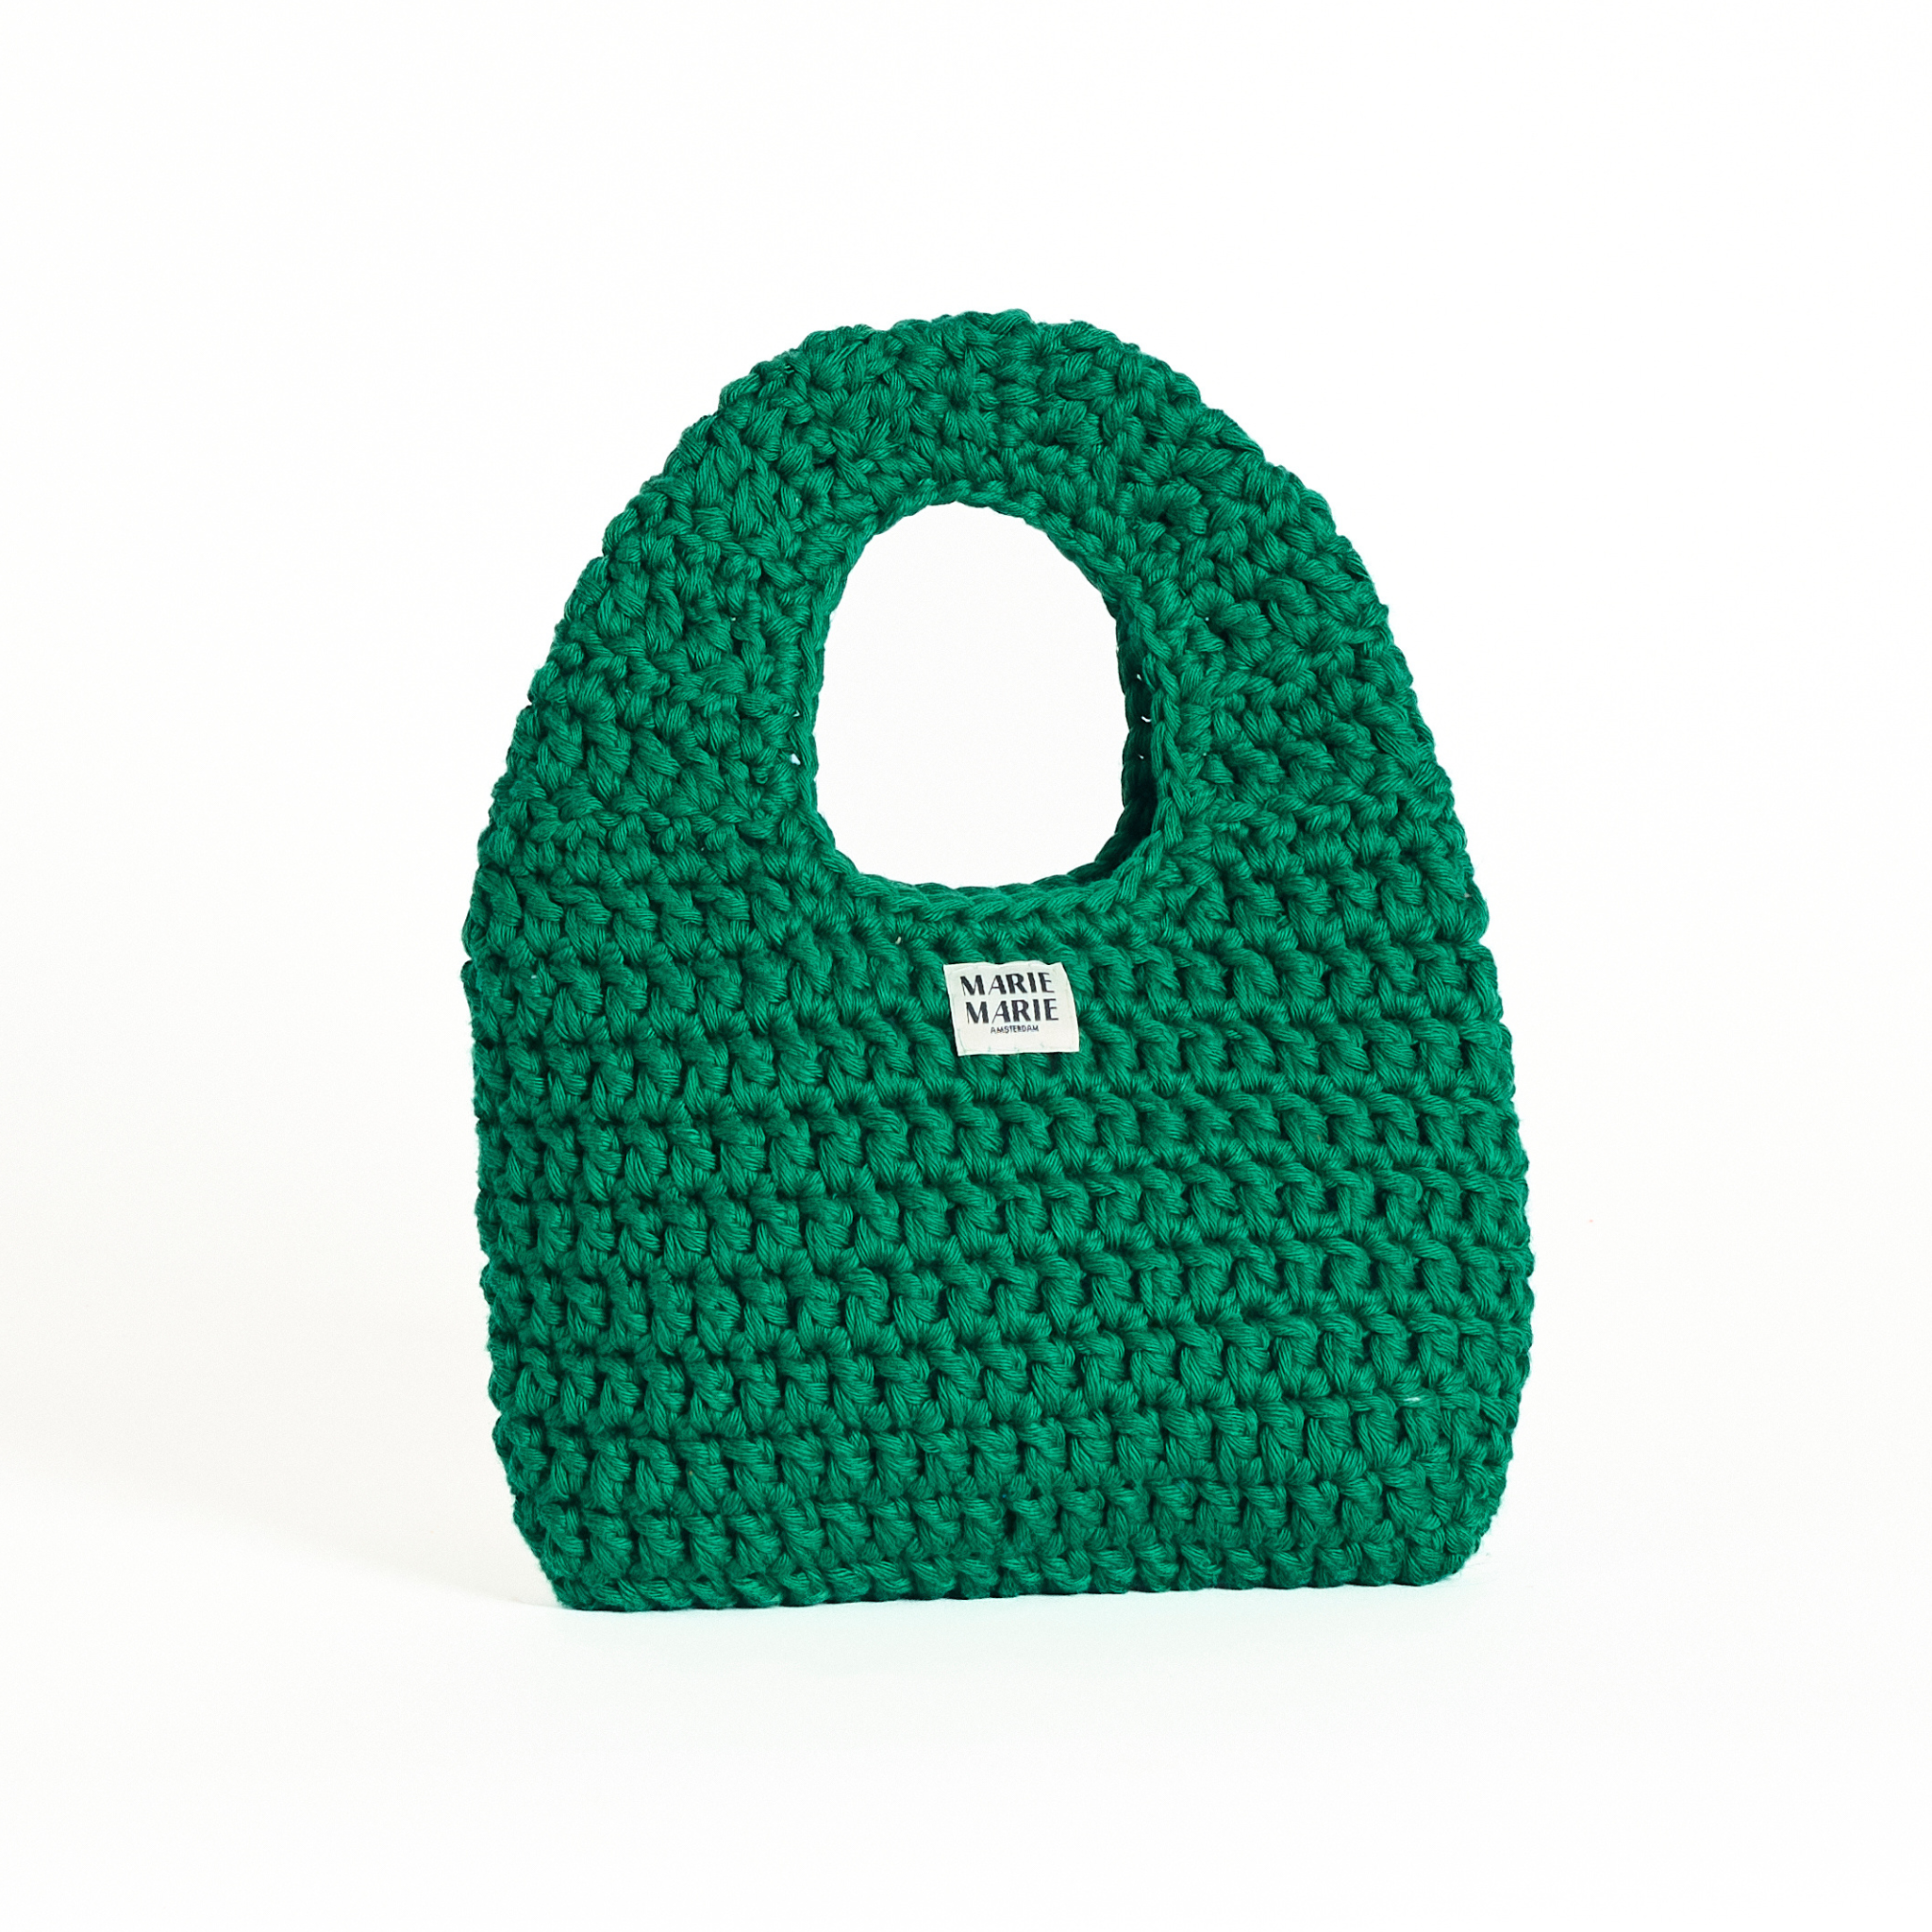 Circle bag amazon green